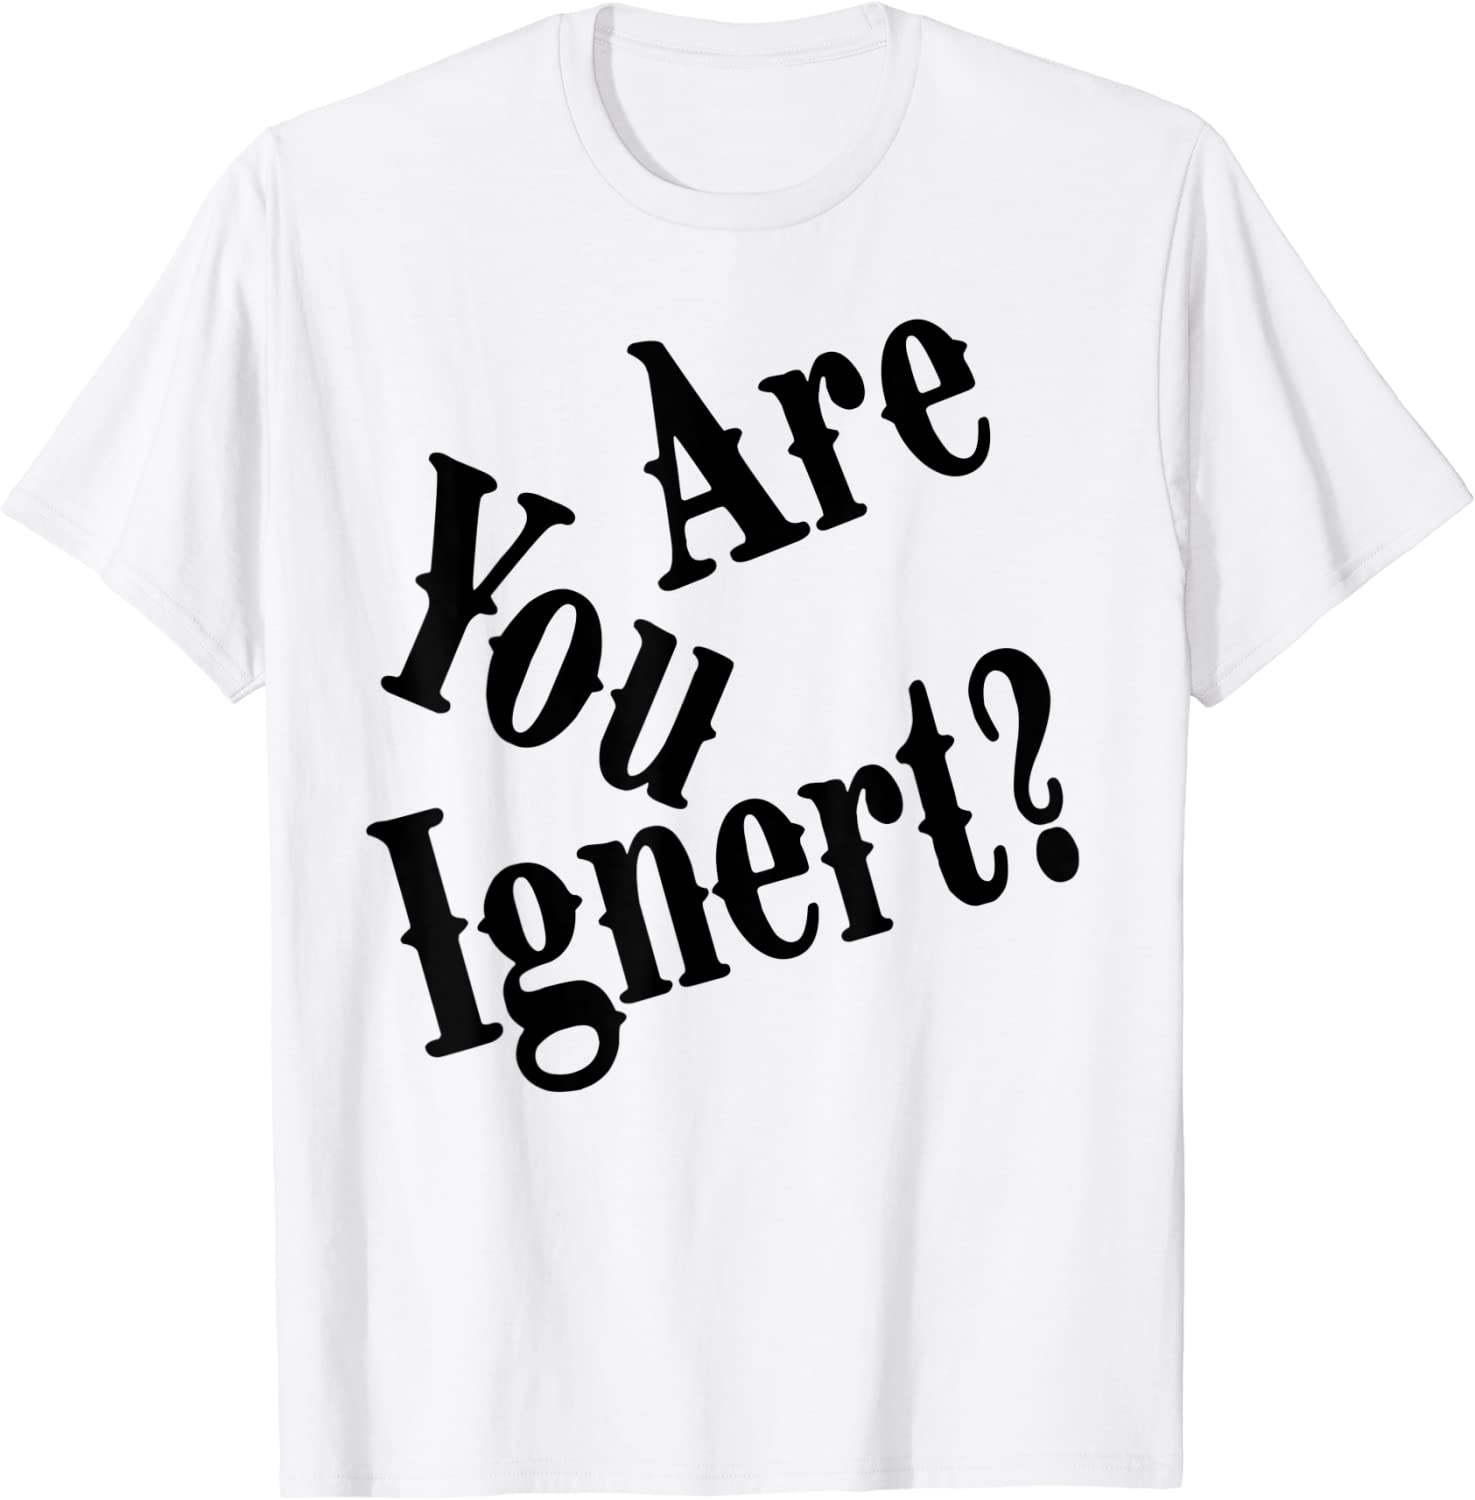 Are You Ignert 2023 Shirt